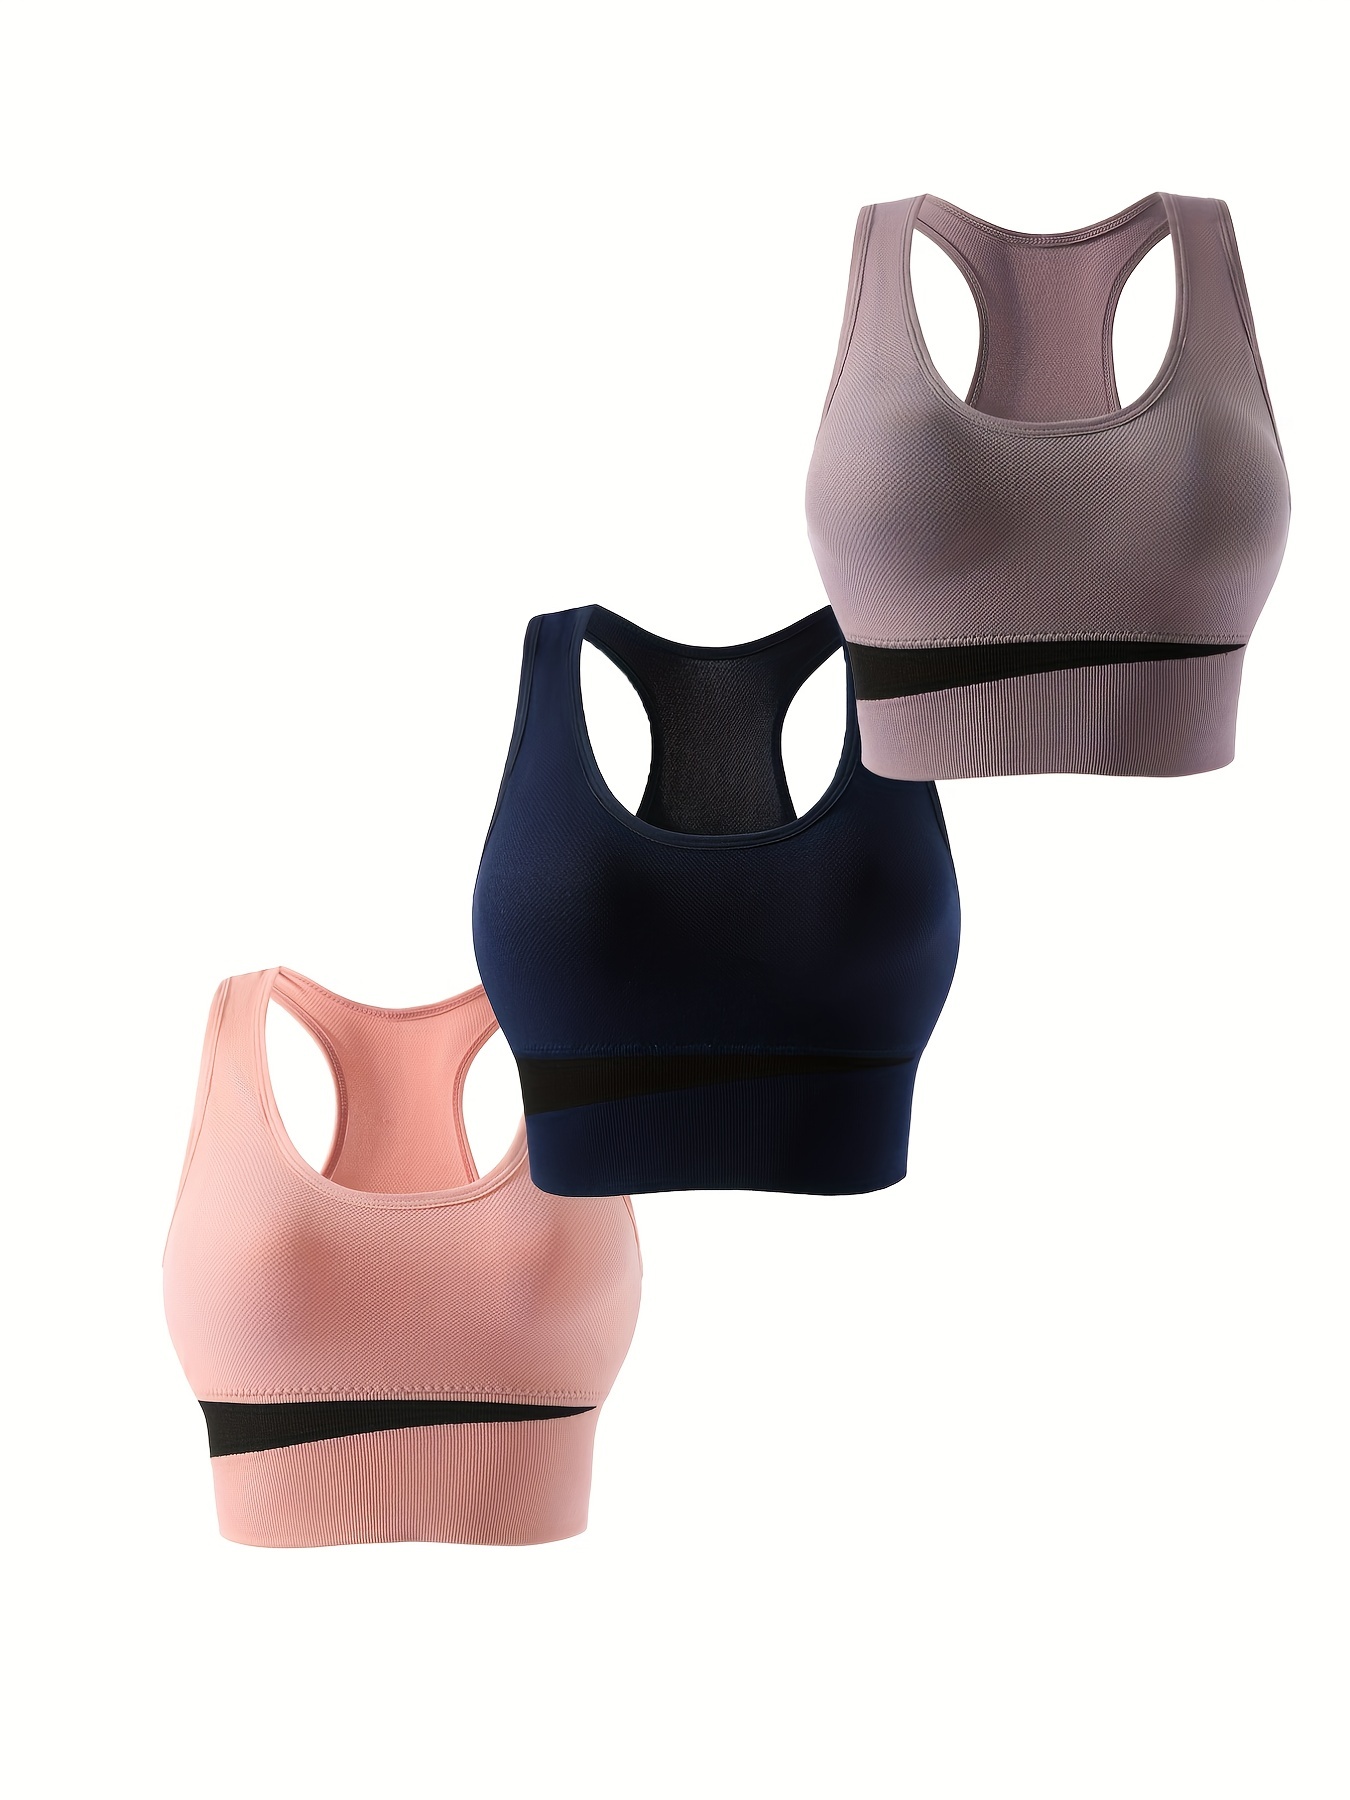  1 Pack Sports Bras for Women Underwear Breathable